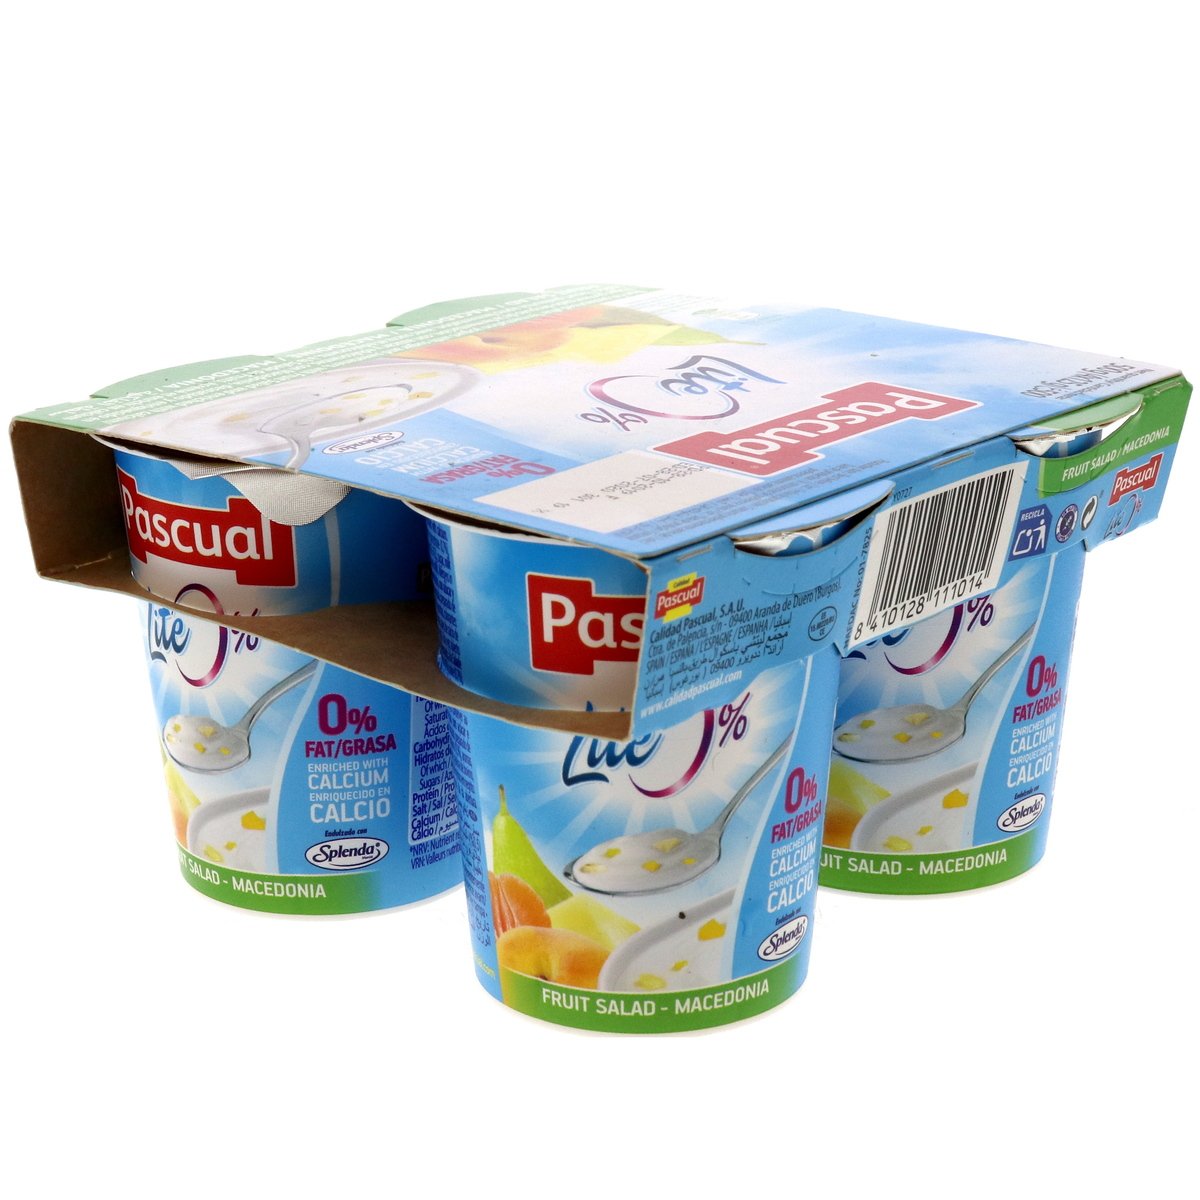 Pascual Fruit Salad Yoghurt Lite 125 g